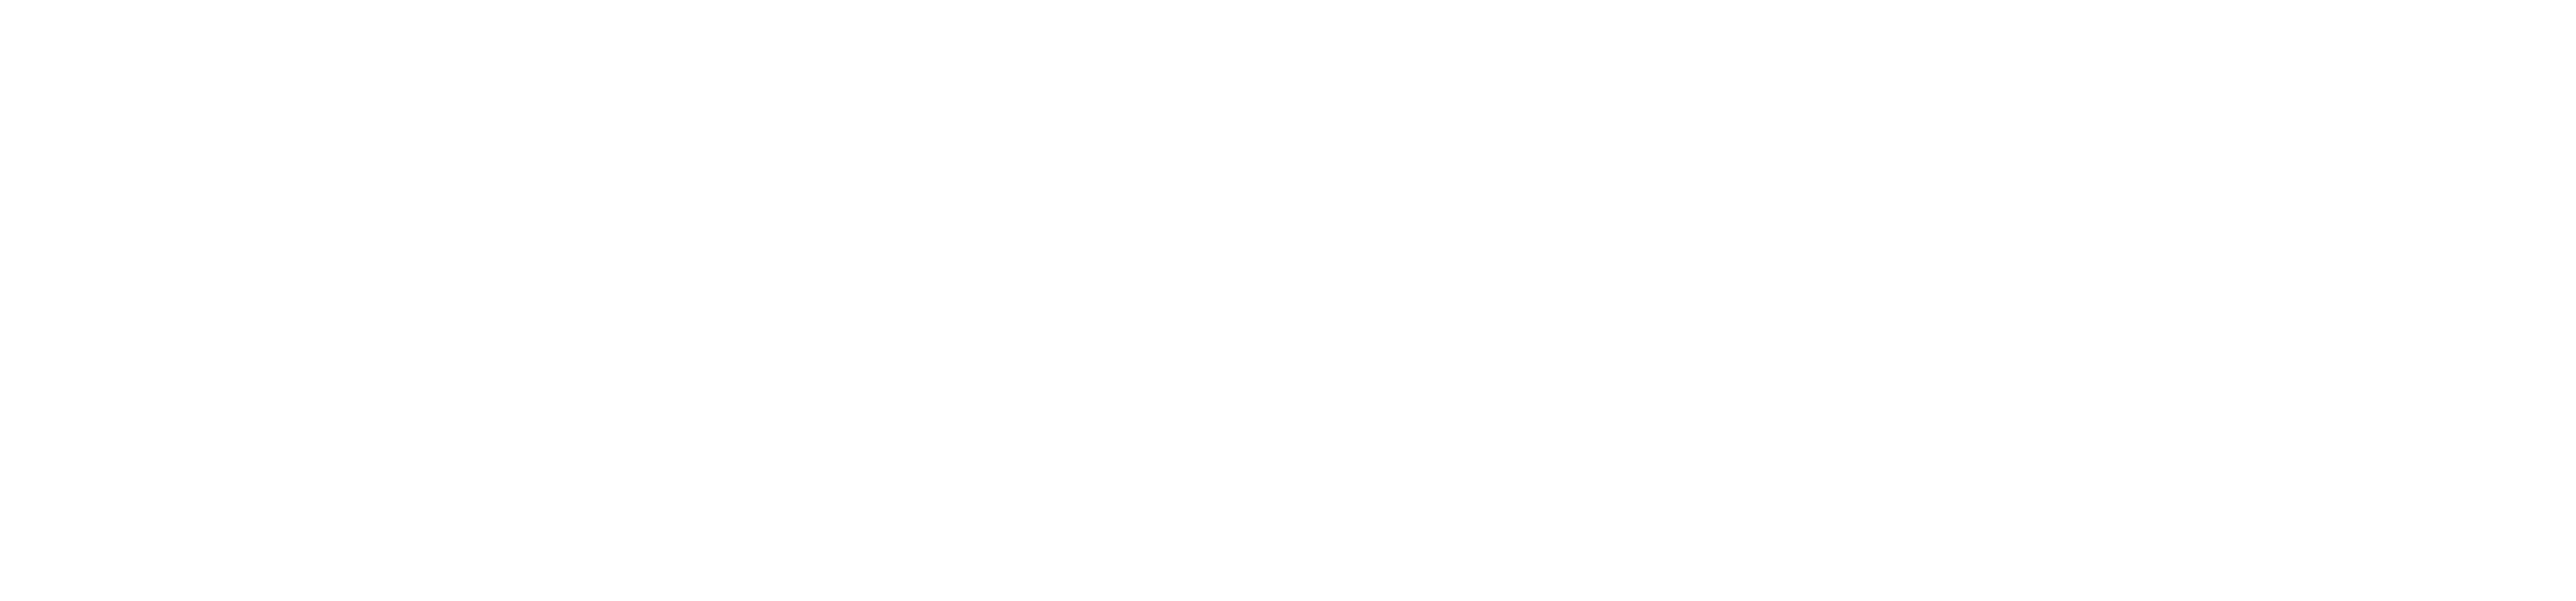 UMKC Institute for Human Development logo